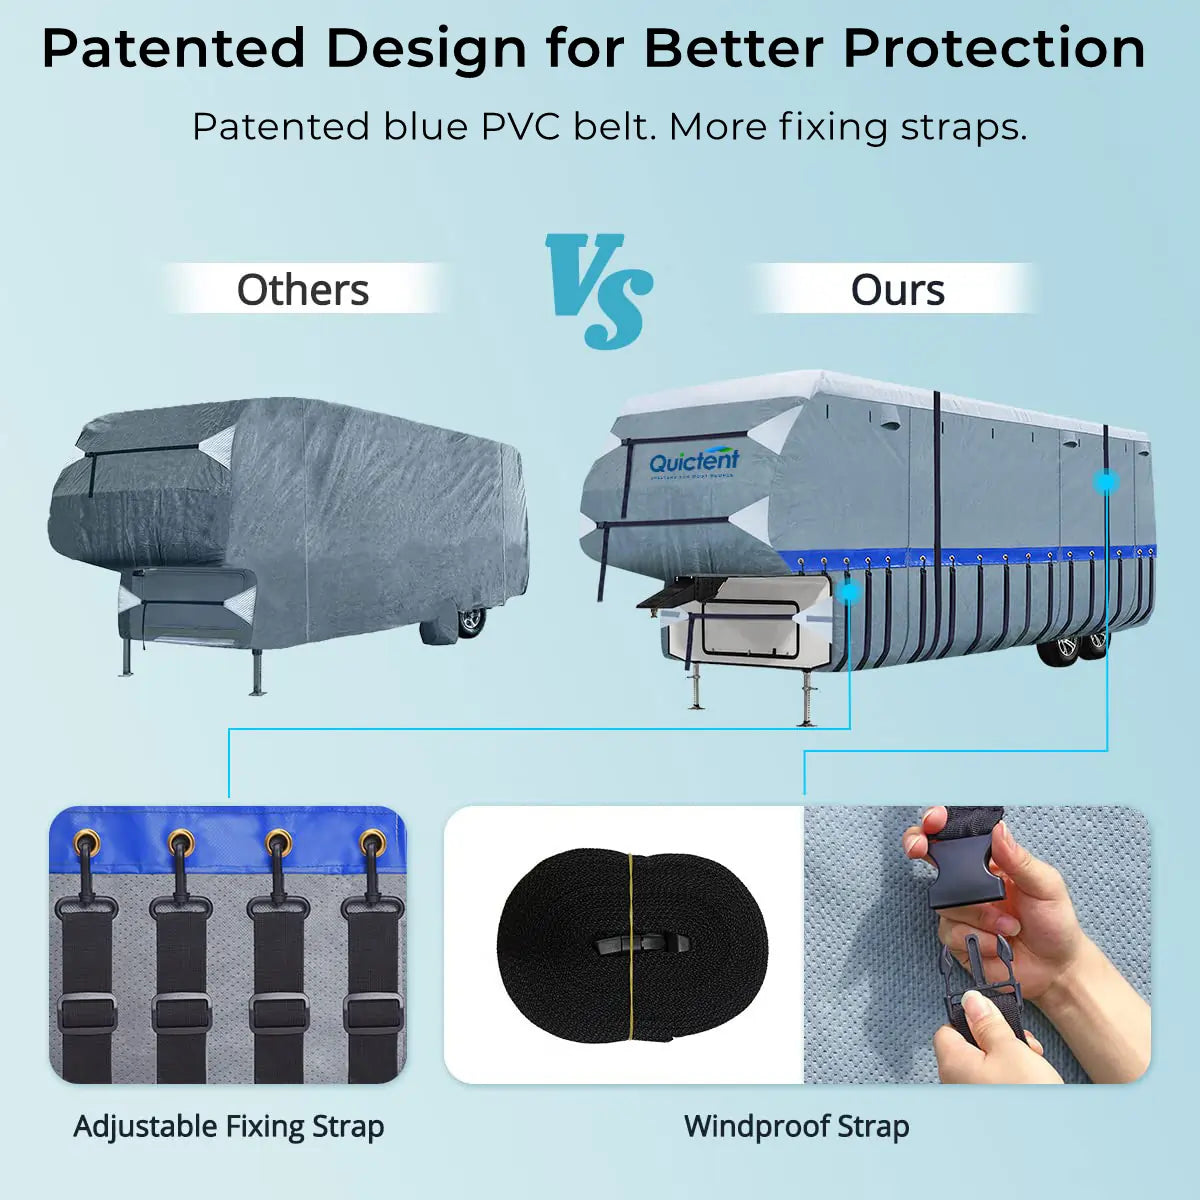 patented blue PVC belt